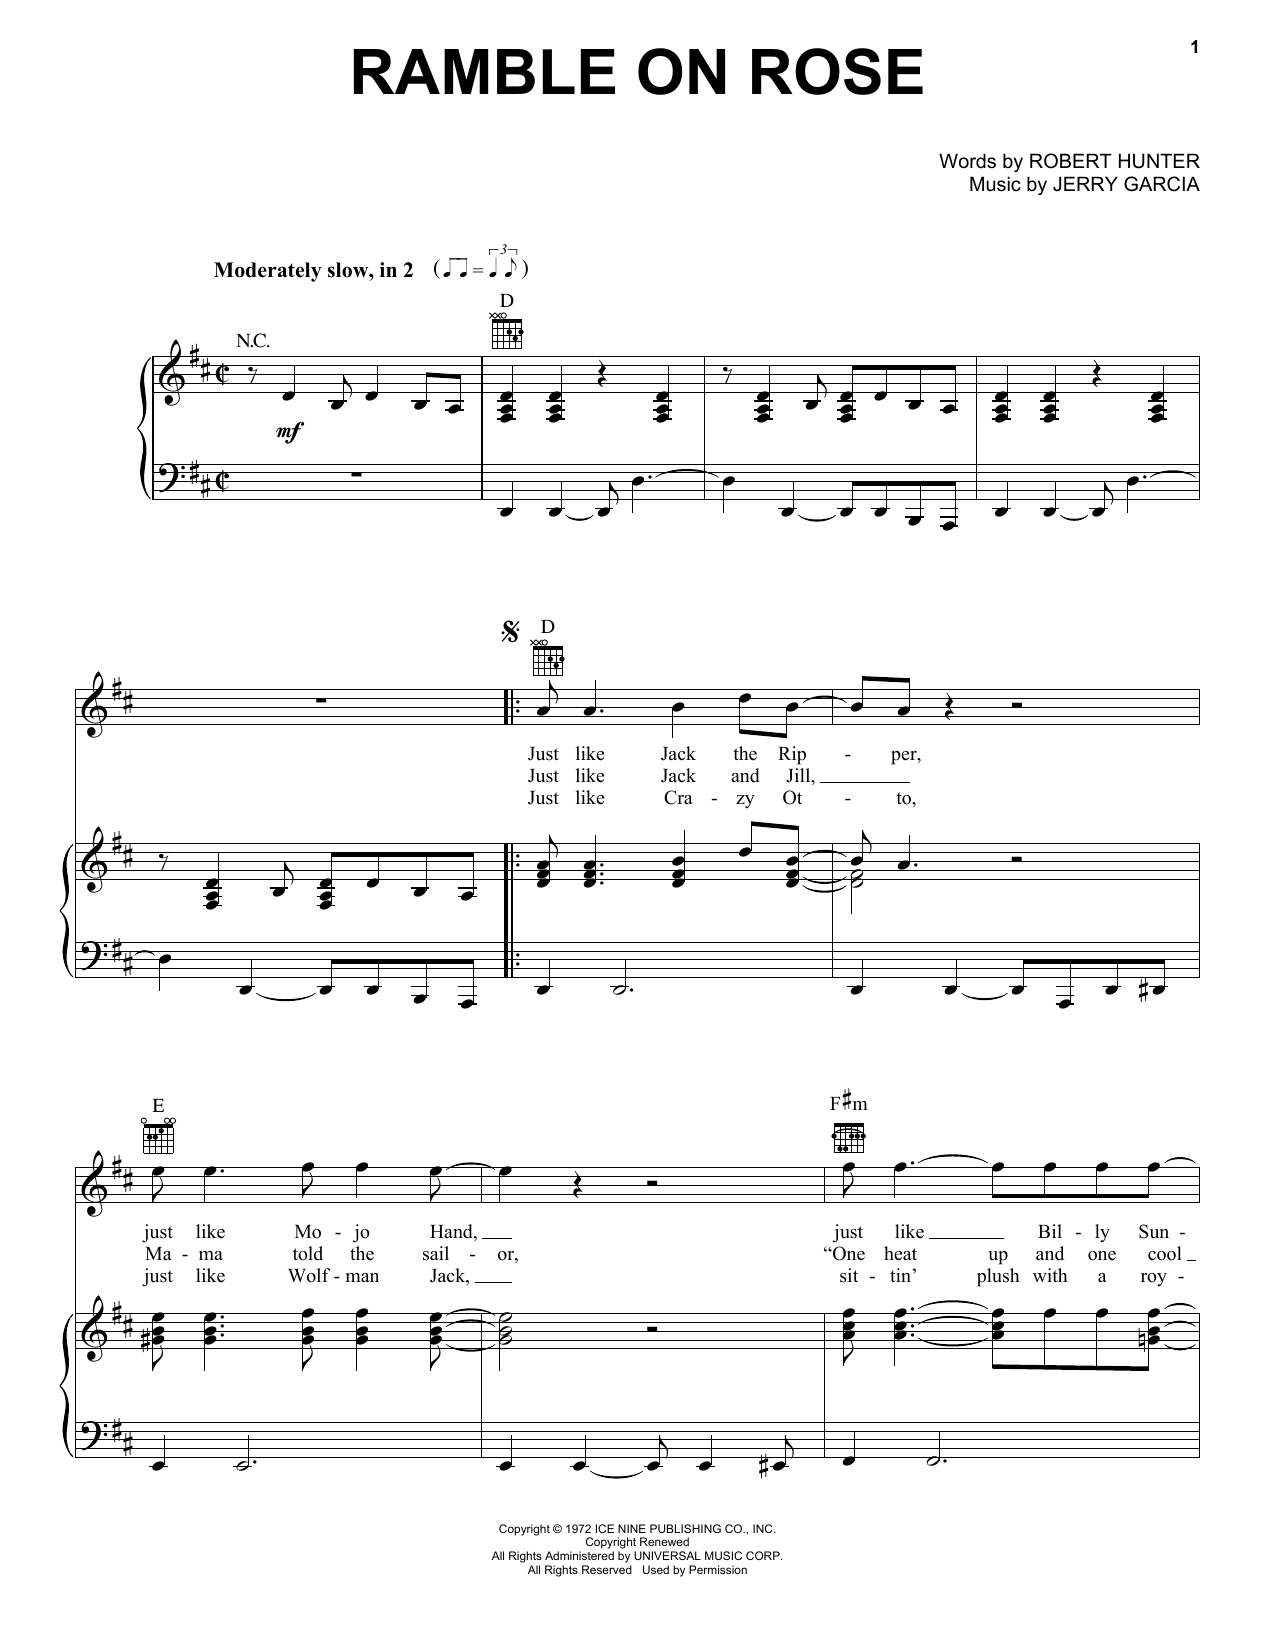 Grateful Dead Ramble On Rose Sheet Music Notes & Chords for Lyrics & Chords - Download or Print PDF